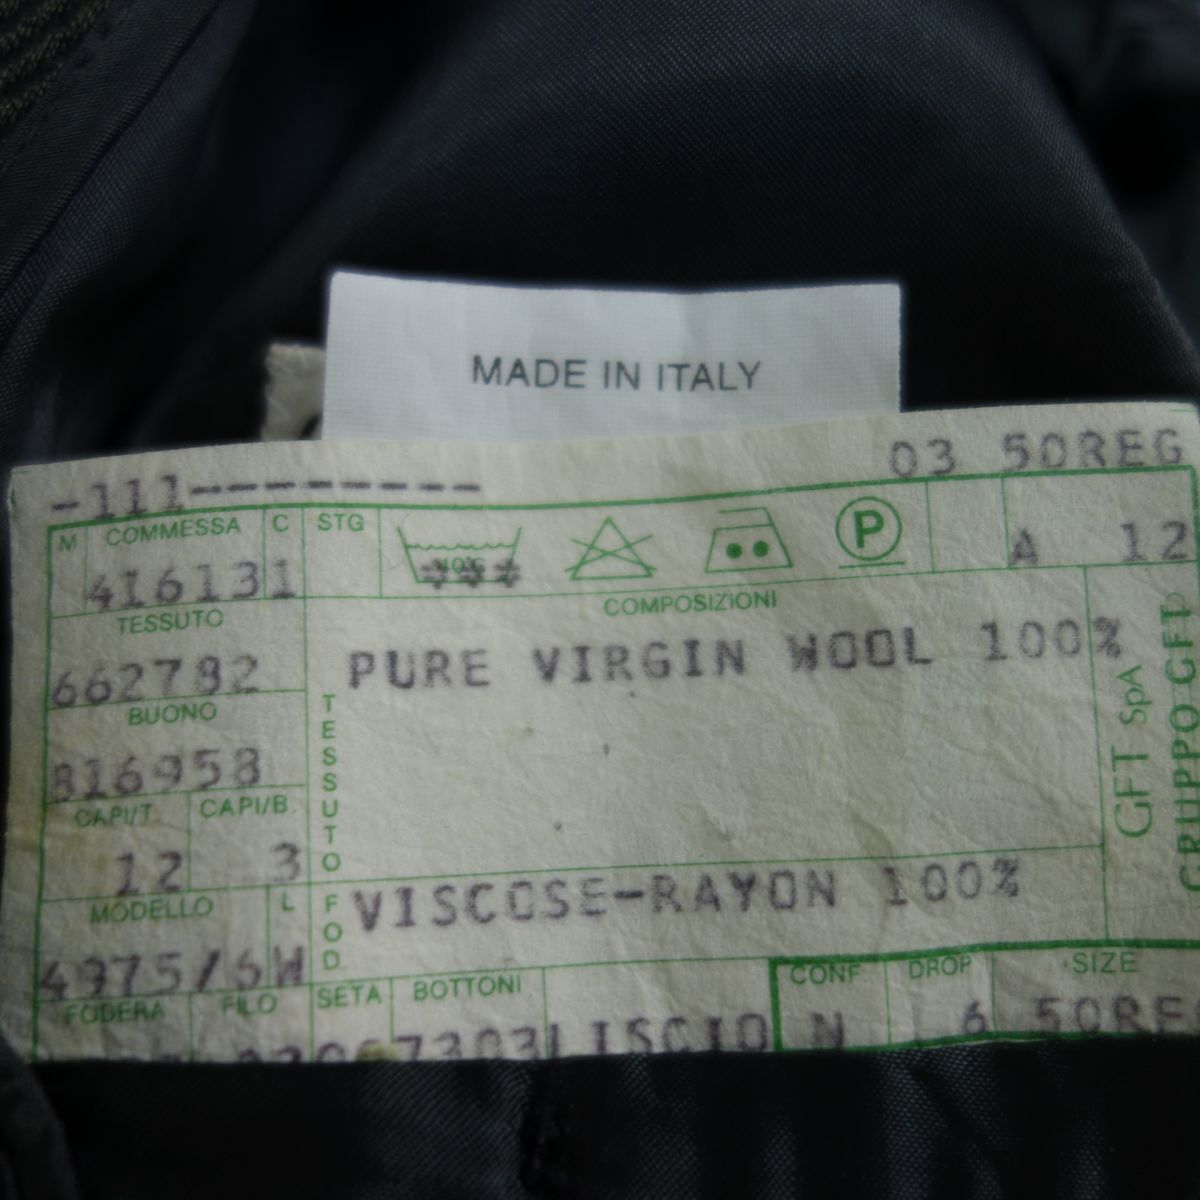  Italy made 90s GIORGIO ARMANIjoru geo Armani mao color stand-up collar long coat gray men's 50 Vintage 